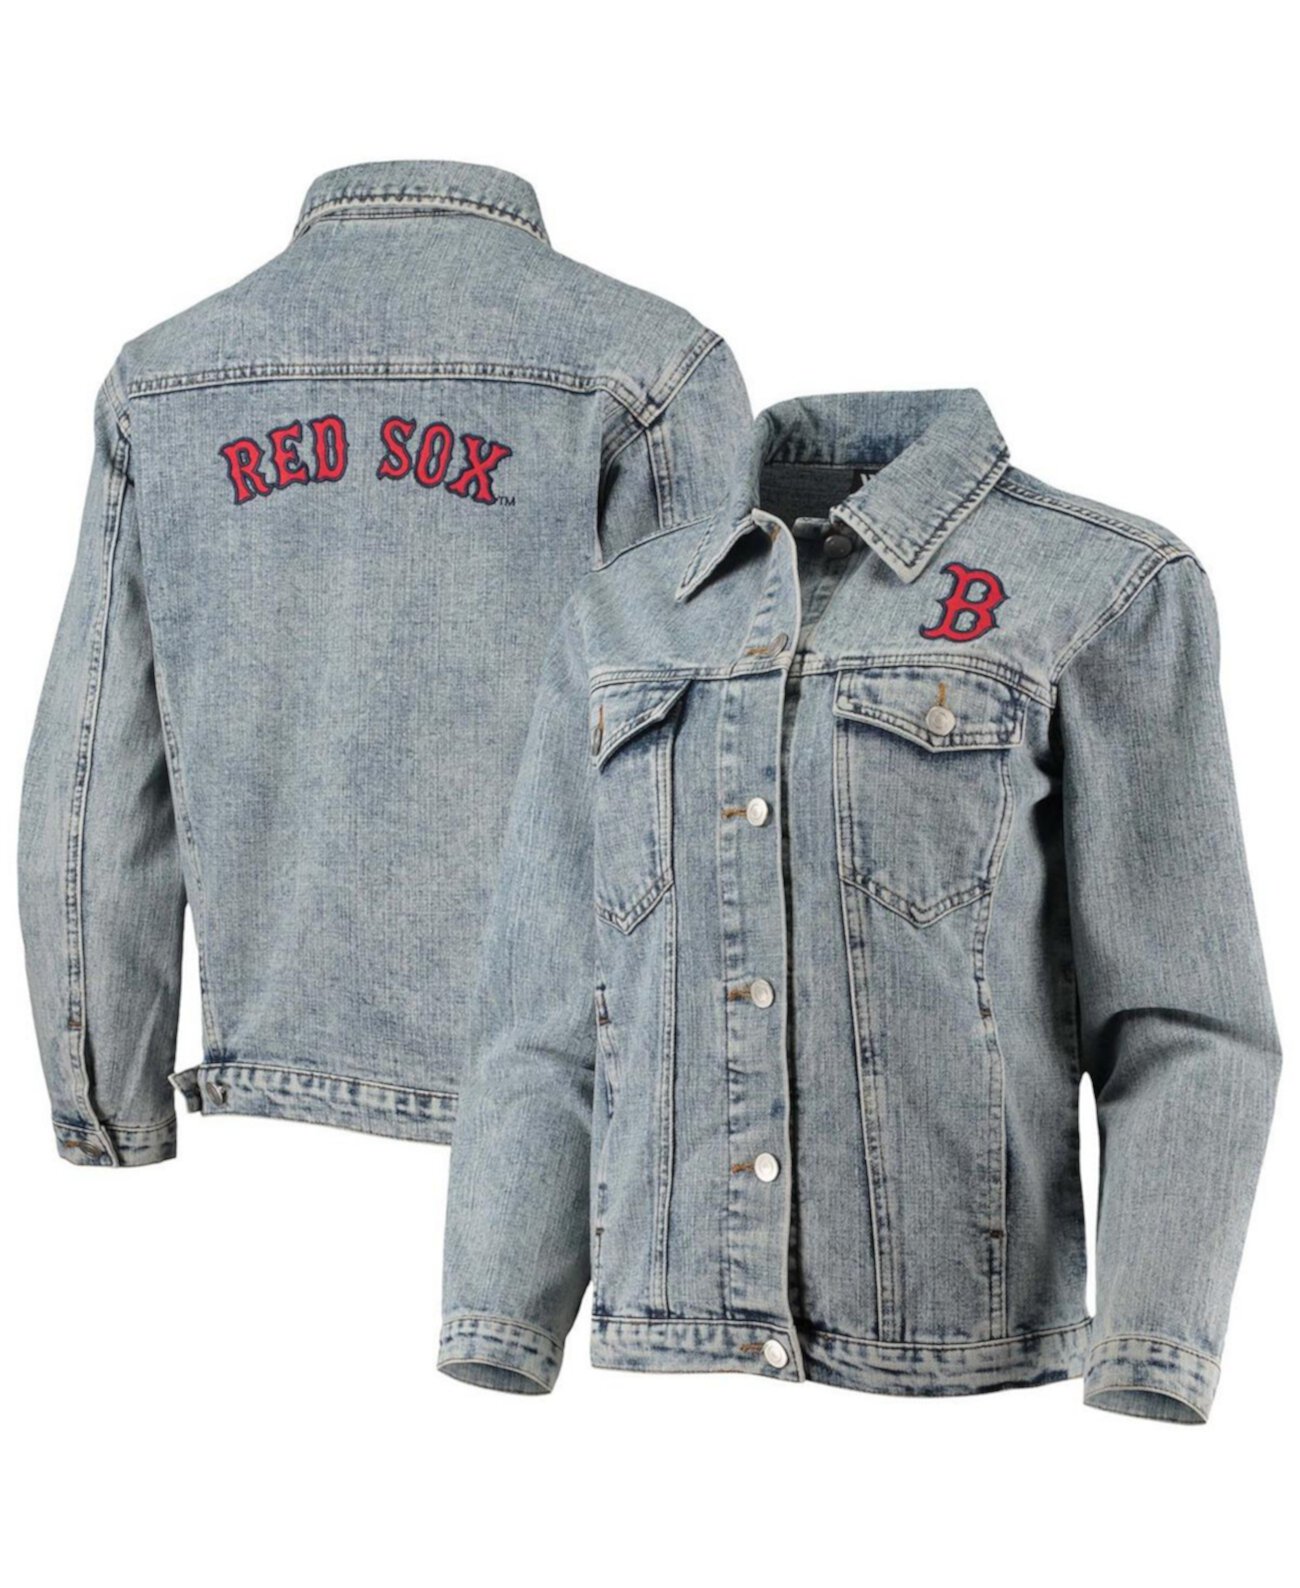 Женская джинсовая куртка на пуговицах Boston Red Sox Team с нашивками The Wild Collective